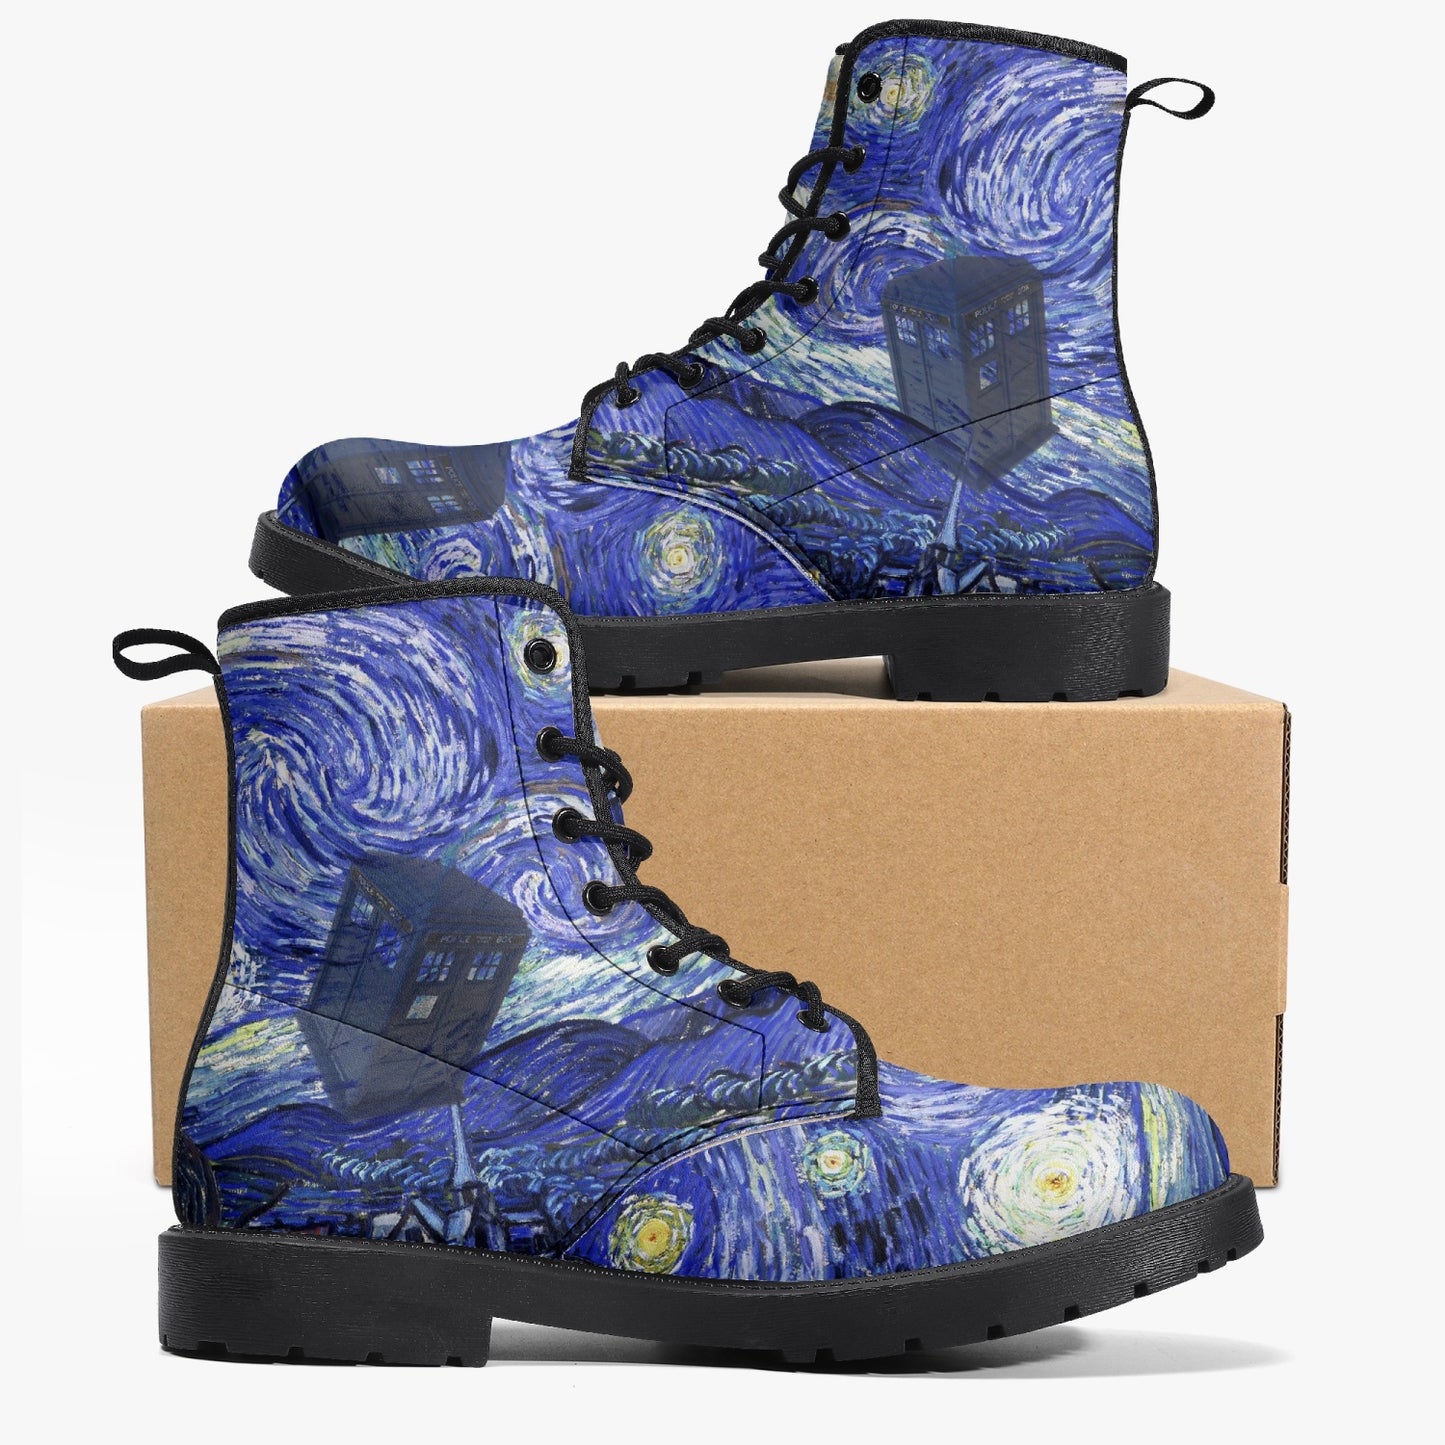 Van Gogh and the Doctor Vegan Leather Combat Boots - Starry Night Tardis Boots (JPREG34)